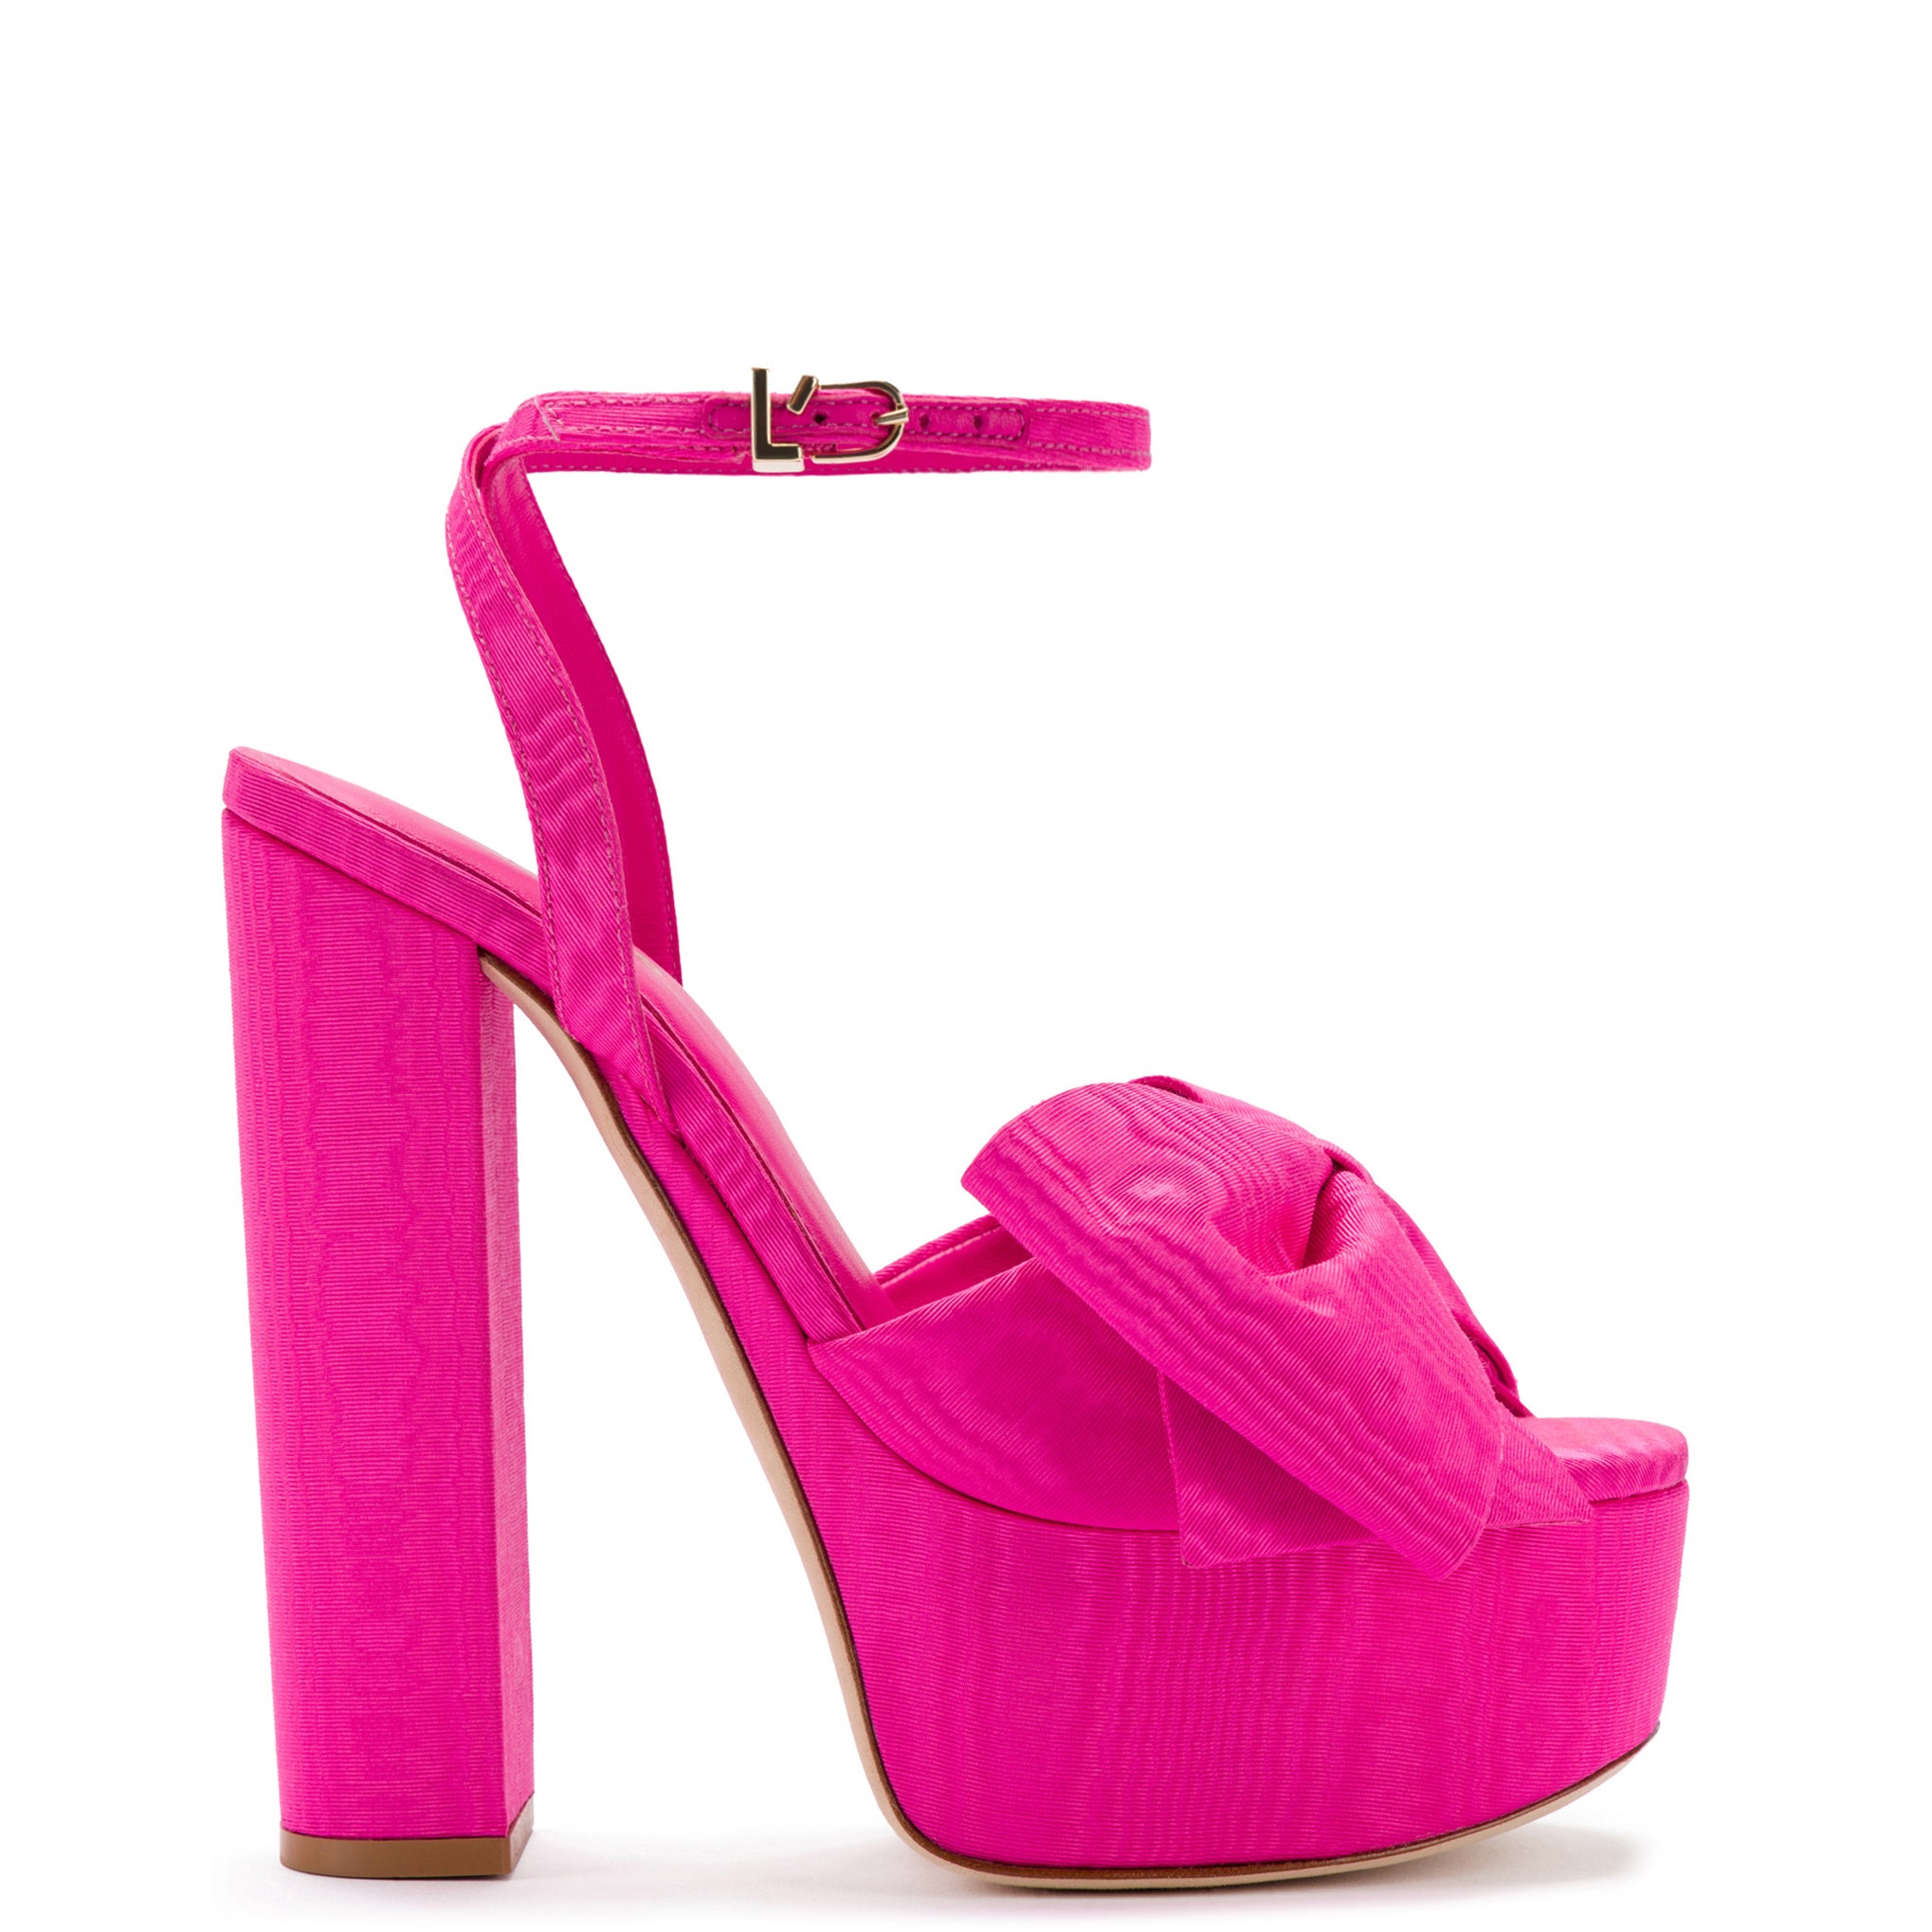 New Bcbc Maxazria size 9 magenta pink ultra high heel shoes | eBay